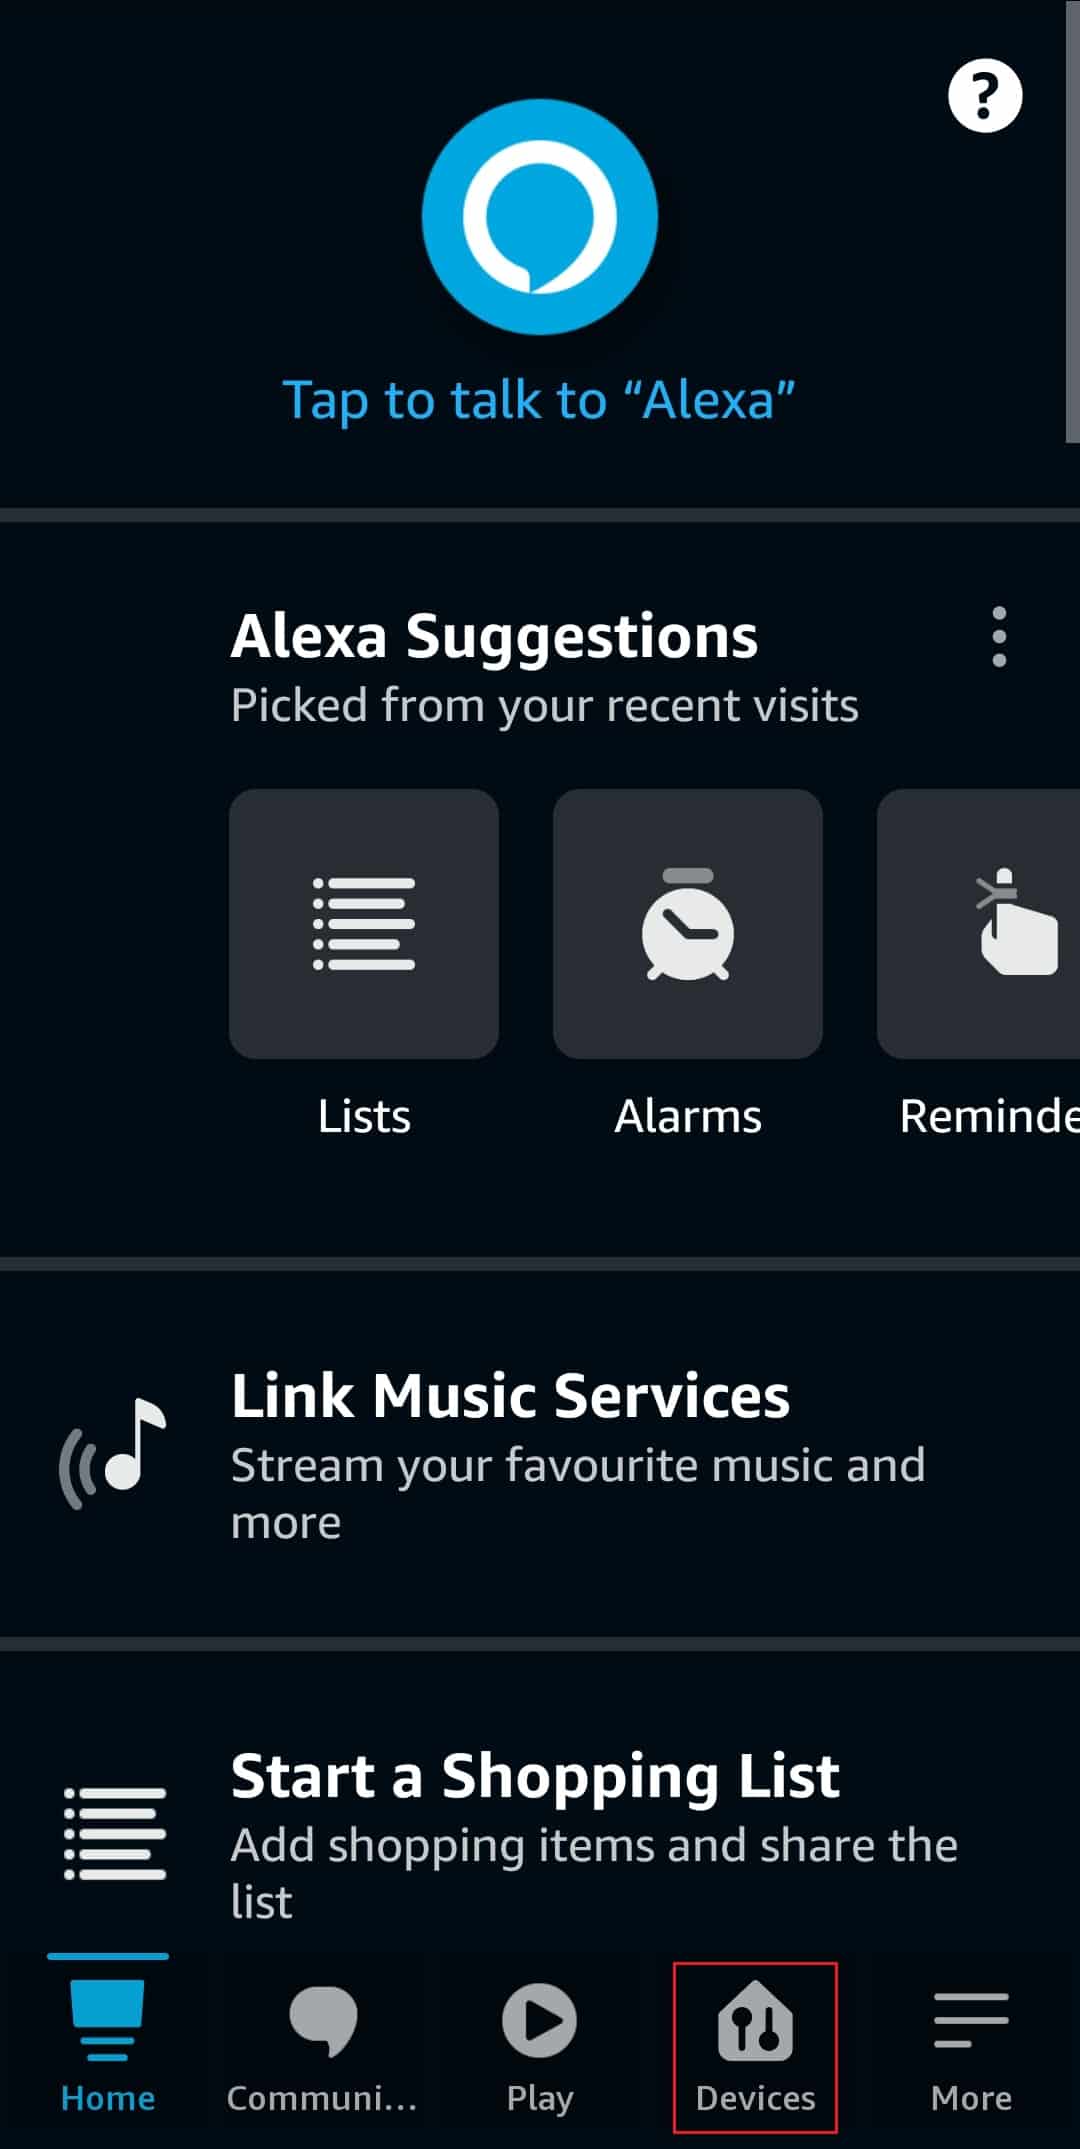 tap on Devices in Amazon Alexa app